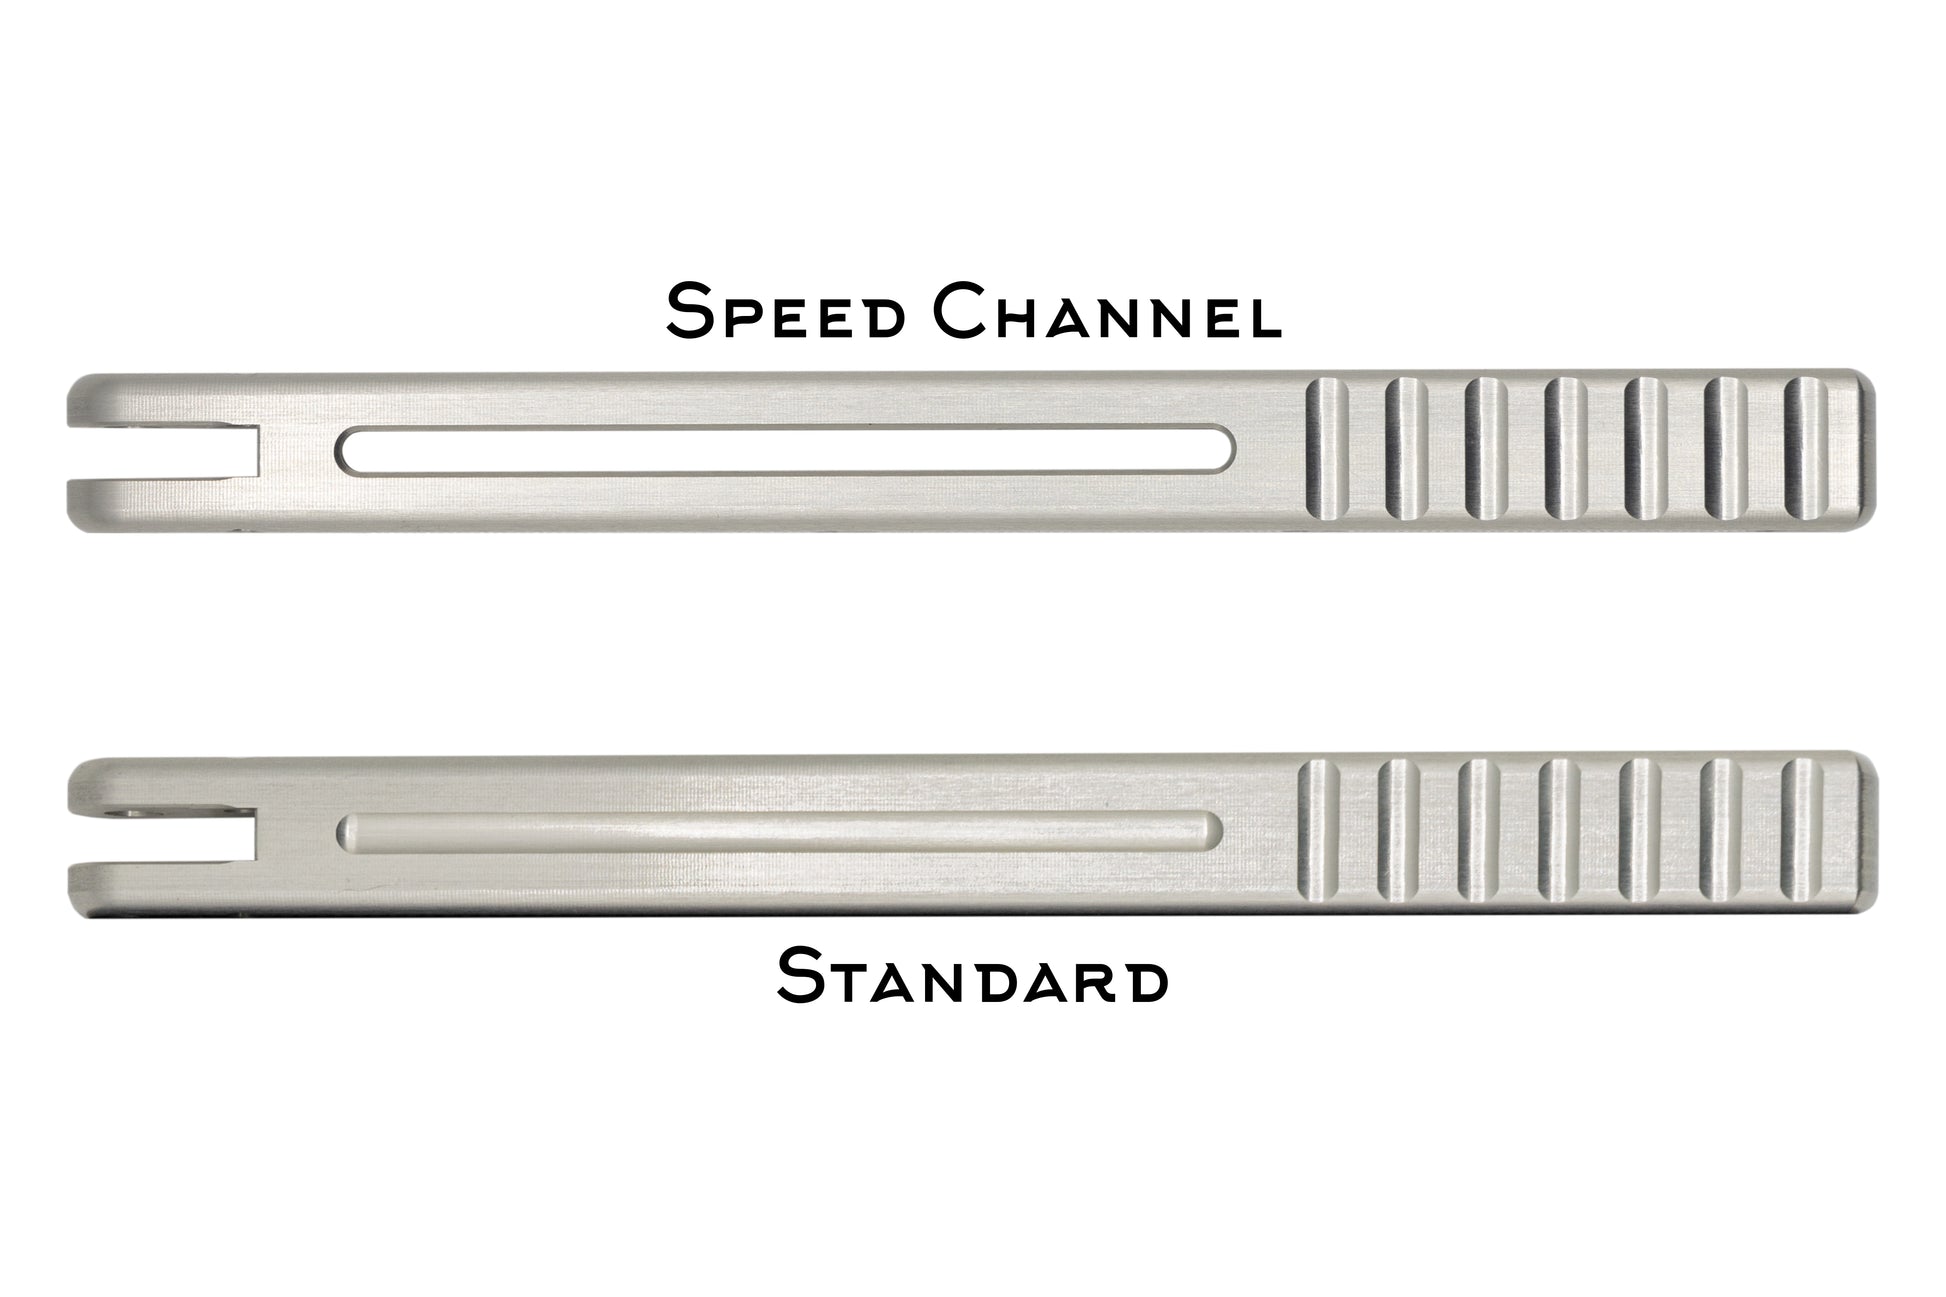 Speed chanel vs standard